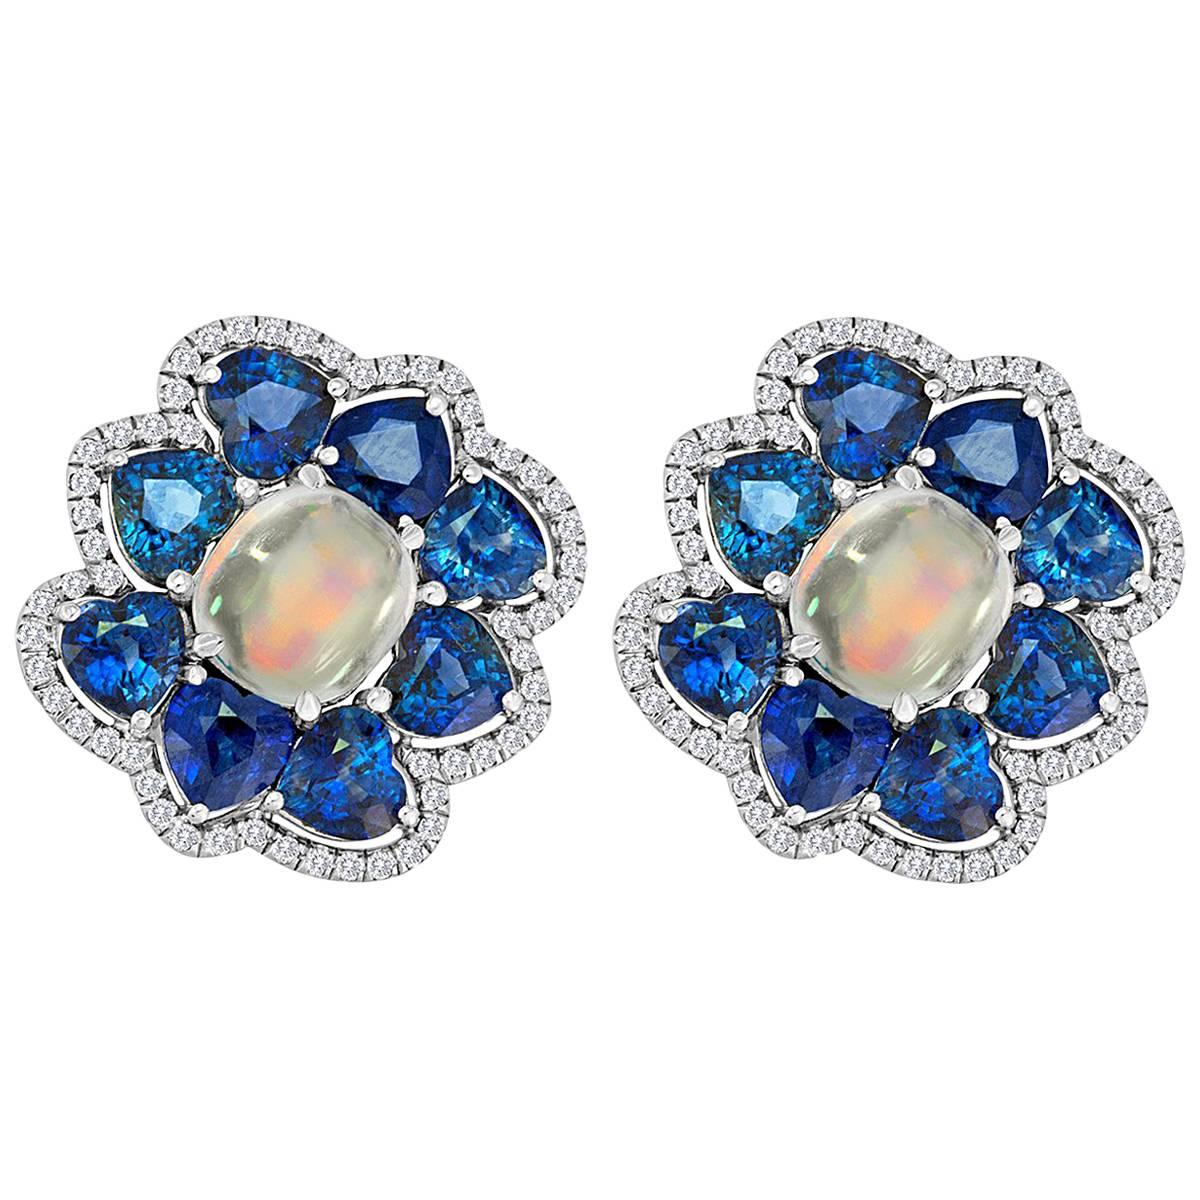 Extraordinary Rainbow Moonstone, Sapphires, Diamond Earrings in 18 Karat Gold